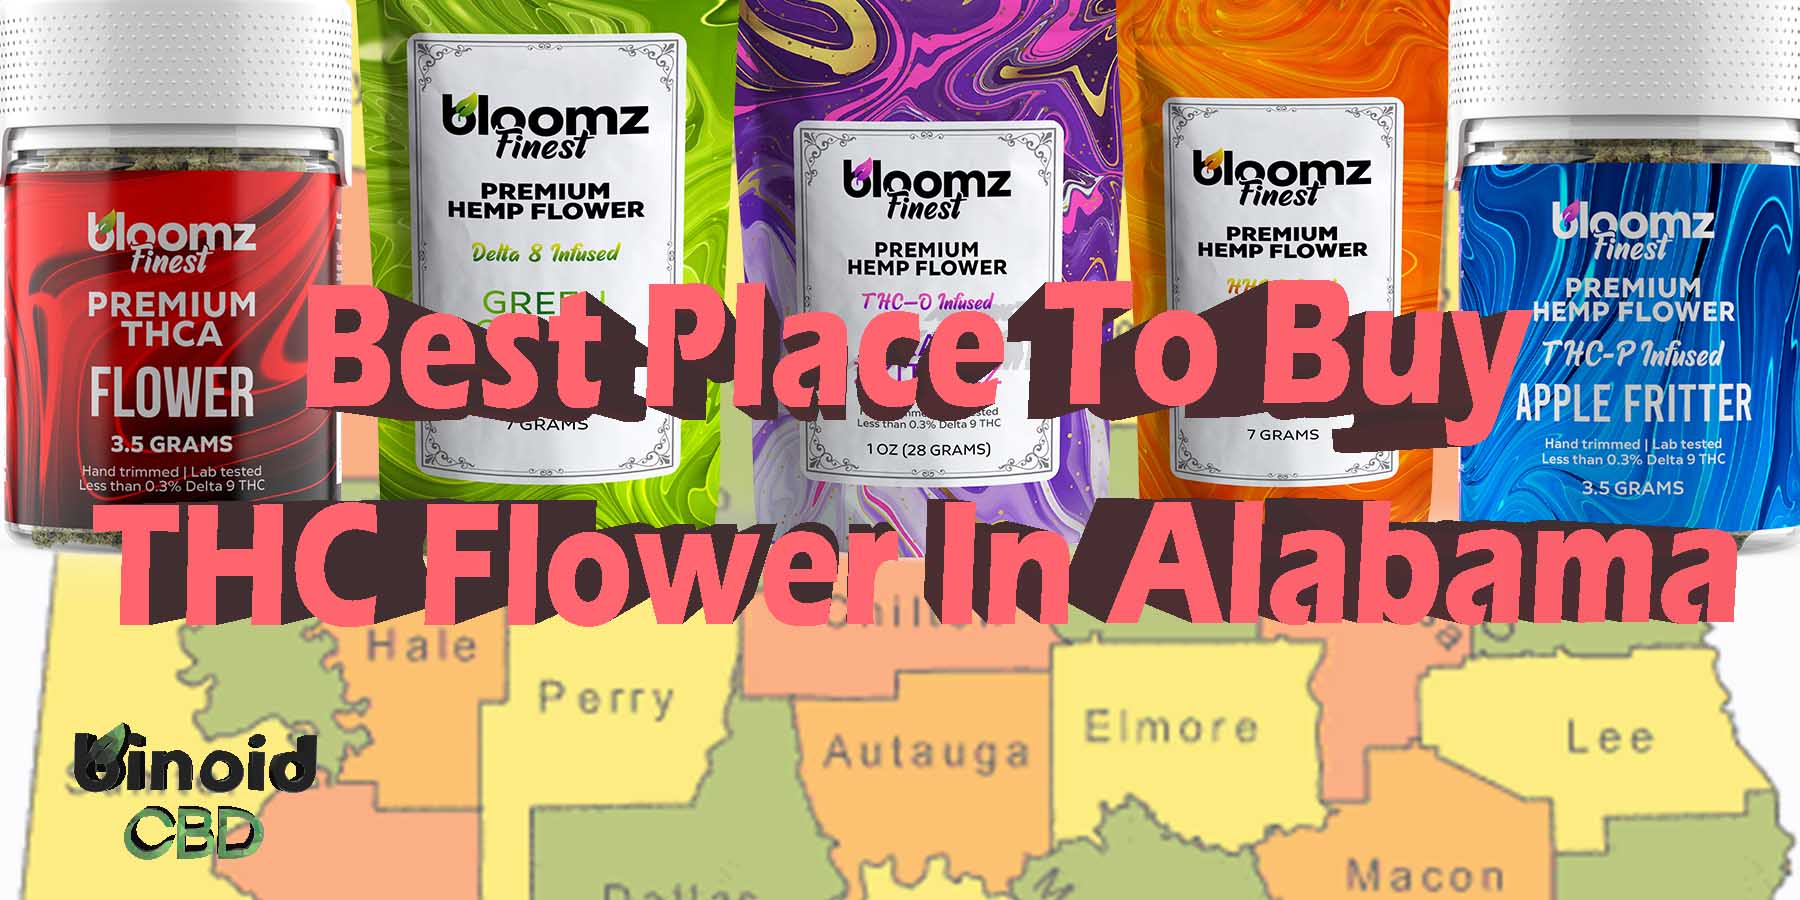 Buy THC Flower Alabama Joints PreRolls Get Online Near Me For Sale Best Brand Strongest Real Legal Store Shop Reddit